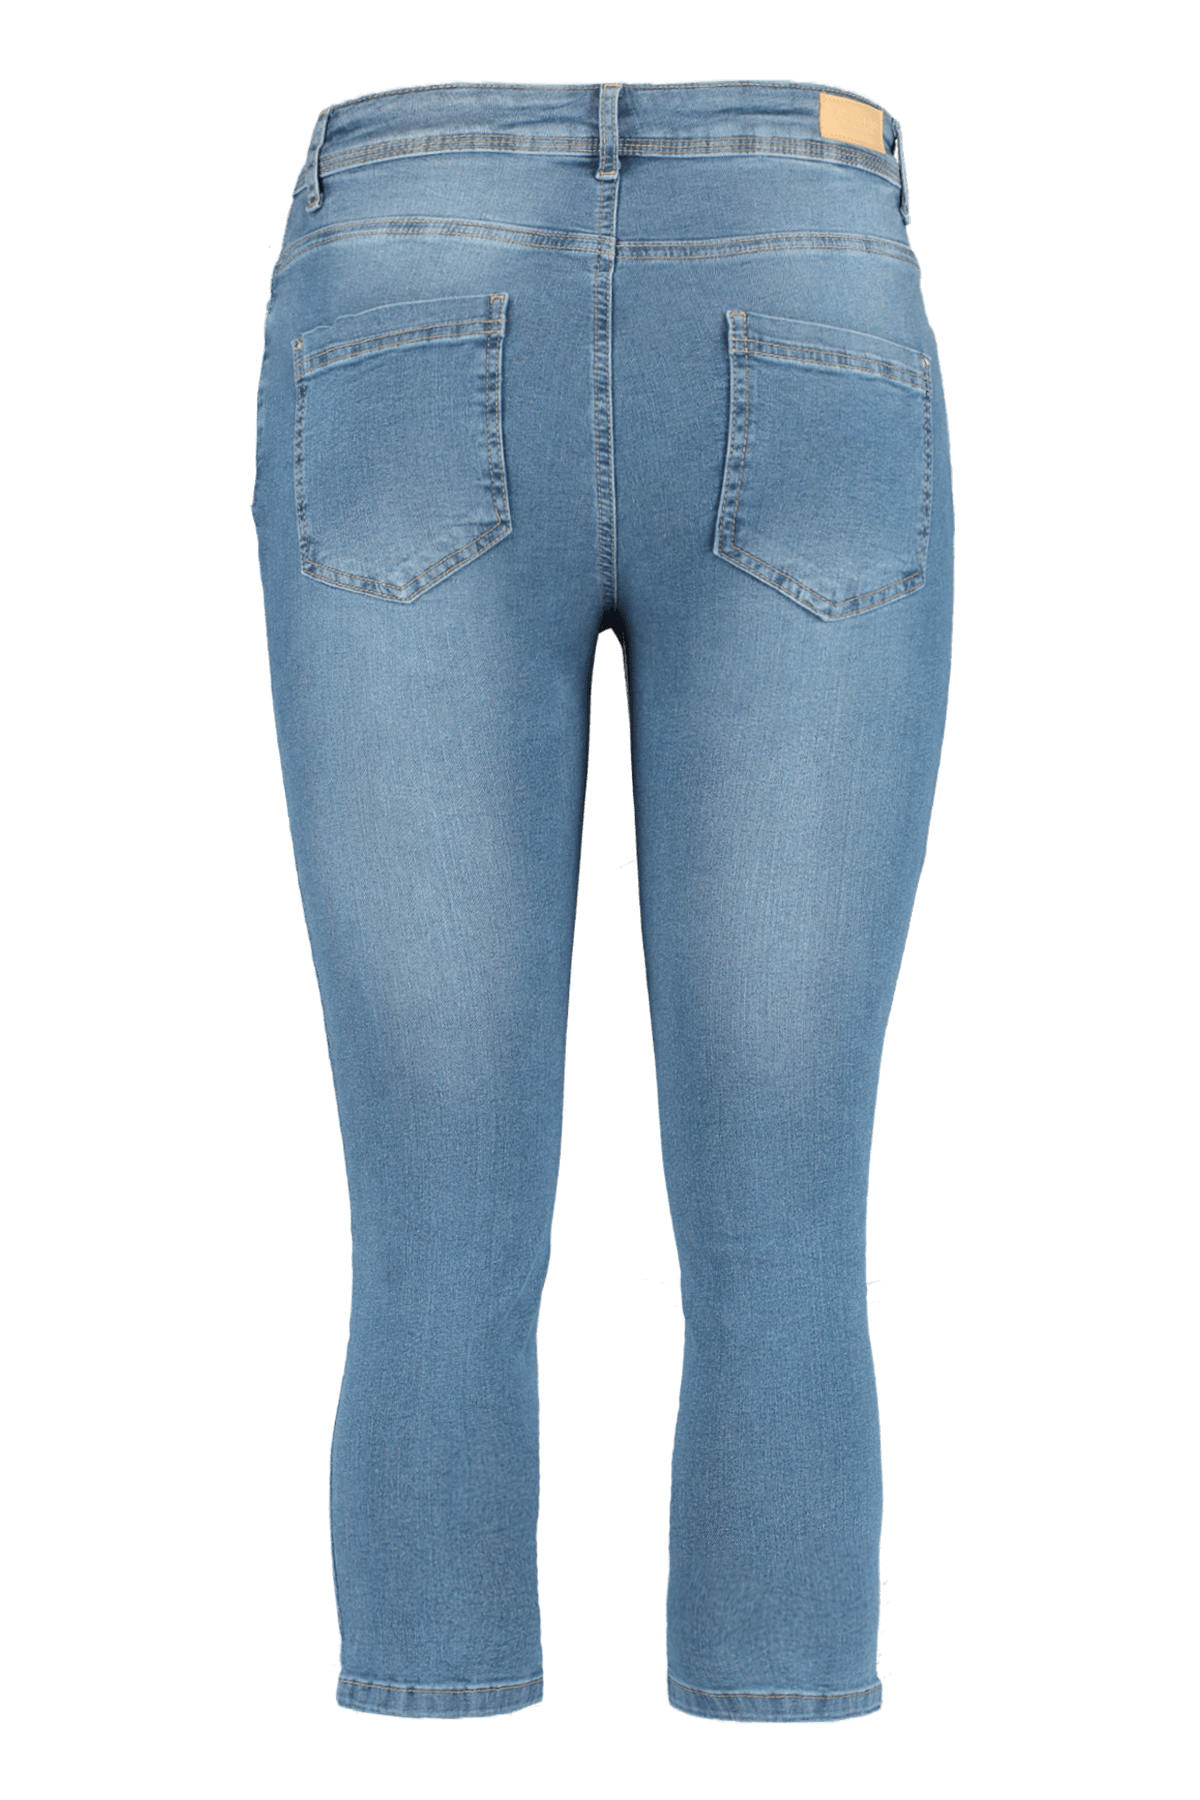 3/4 Skinny leg high waist jeans CHERRY image 3